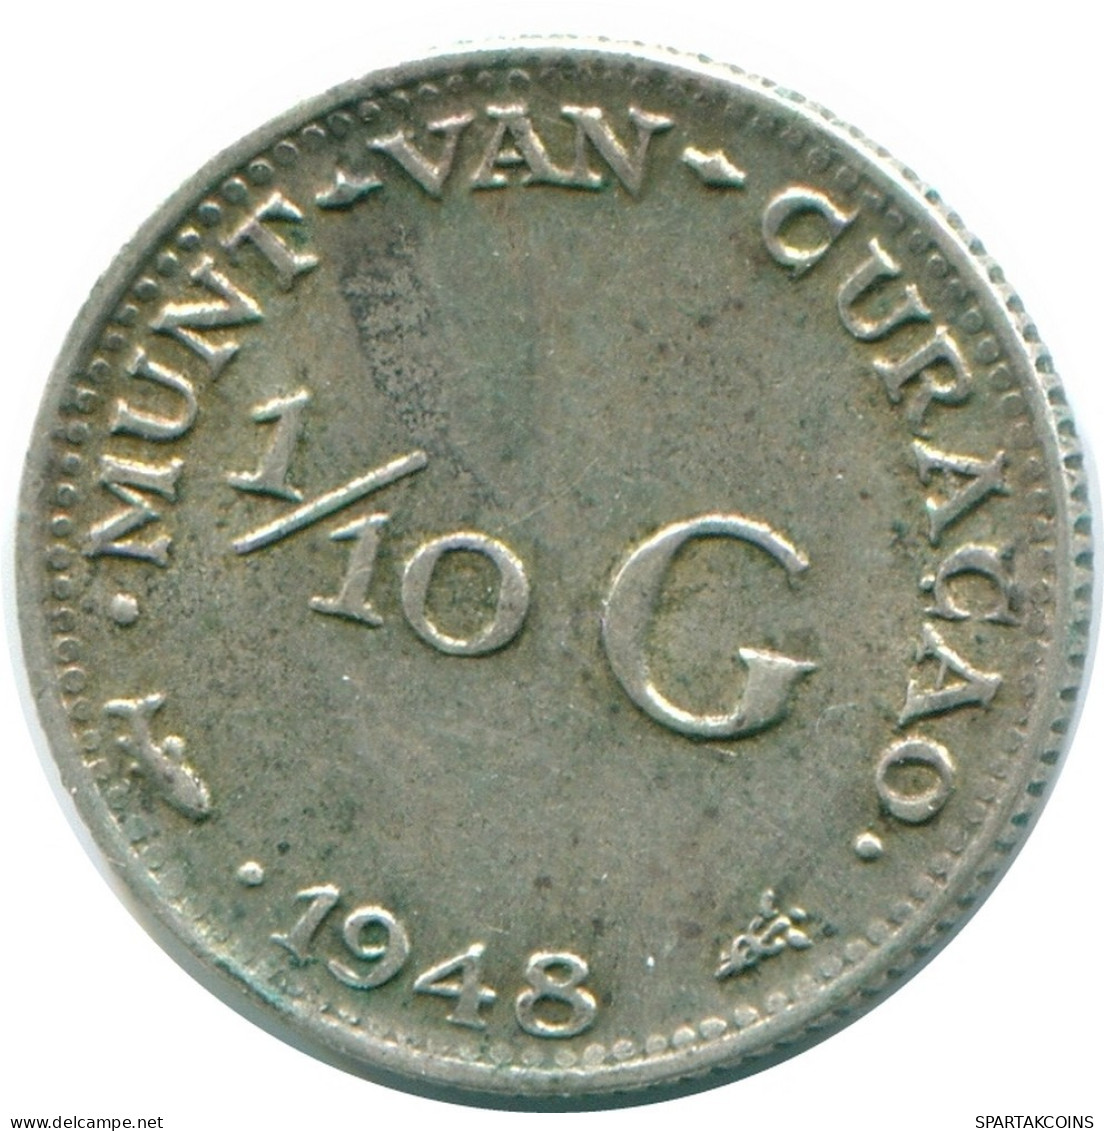 1/10 GULDEN 1948 CURACAO NIEDERLANDE SILBER Koloniale Münze #NL11893.3.D.A - Curacao